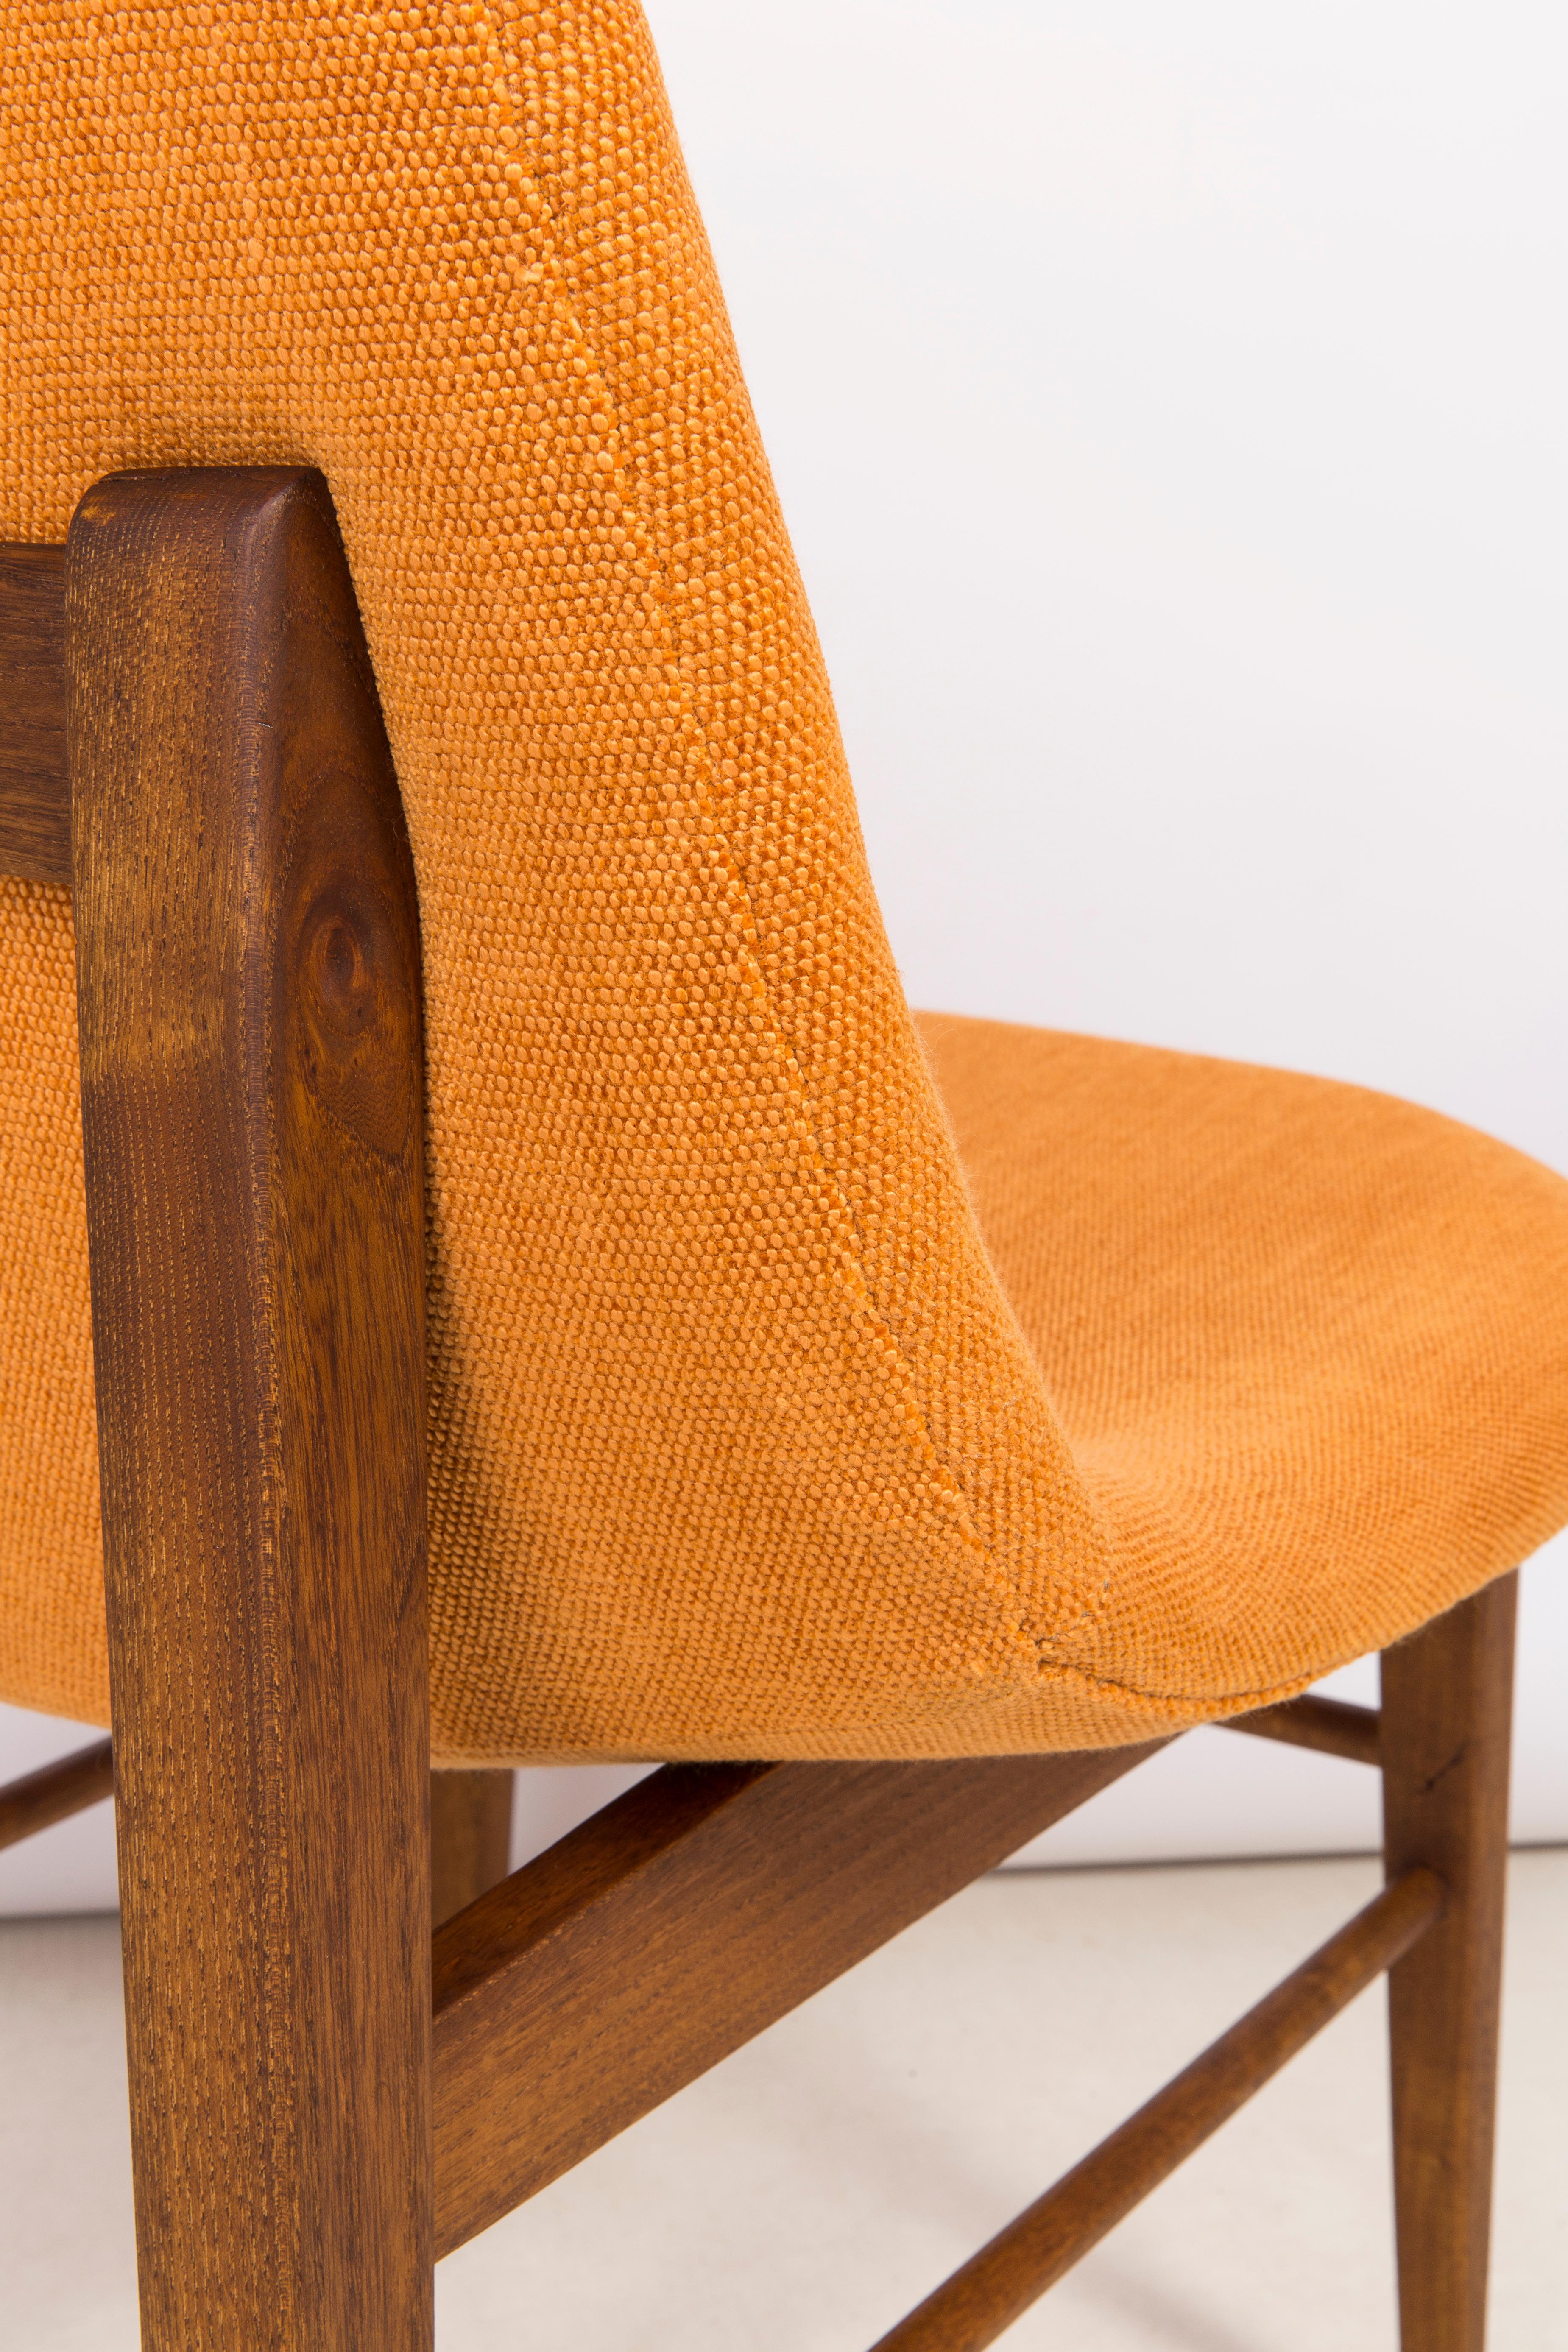 Rare 20th Century Orange Shell Chair, H.Lachert, 1960s For Sale 1